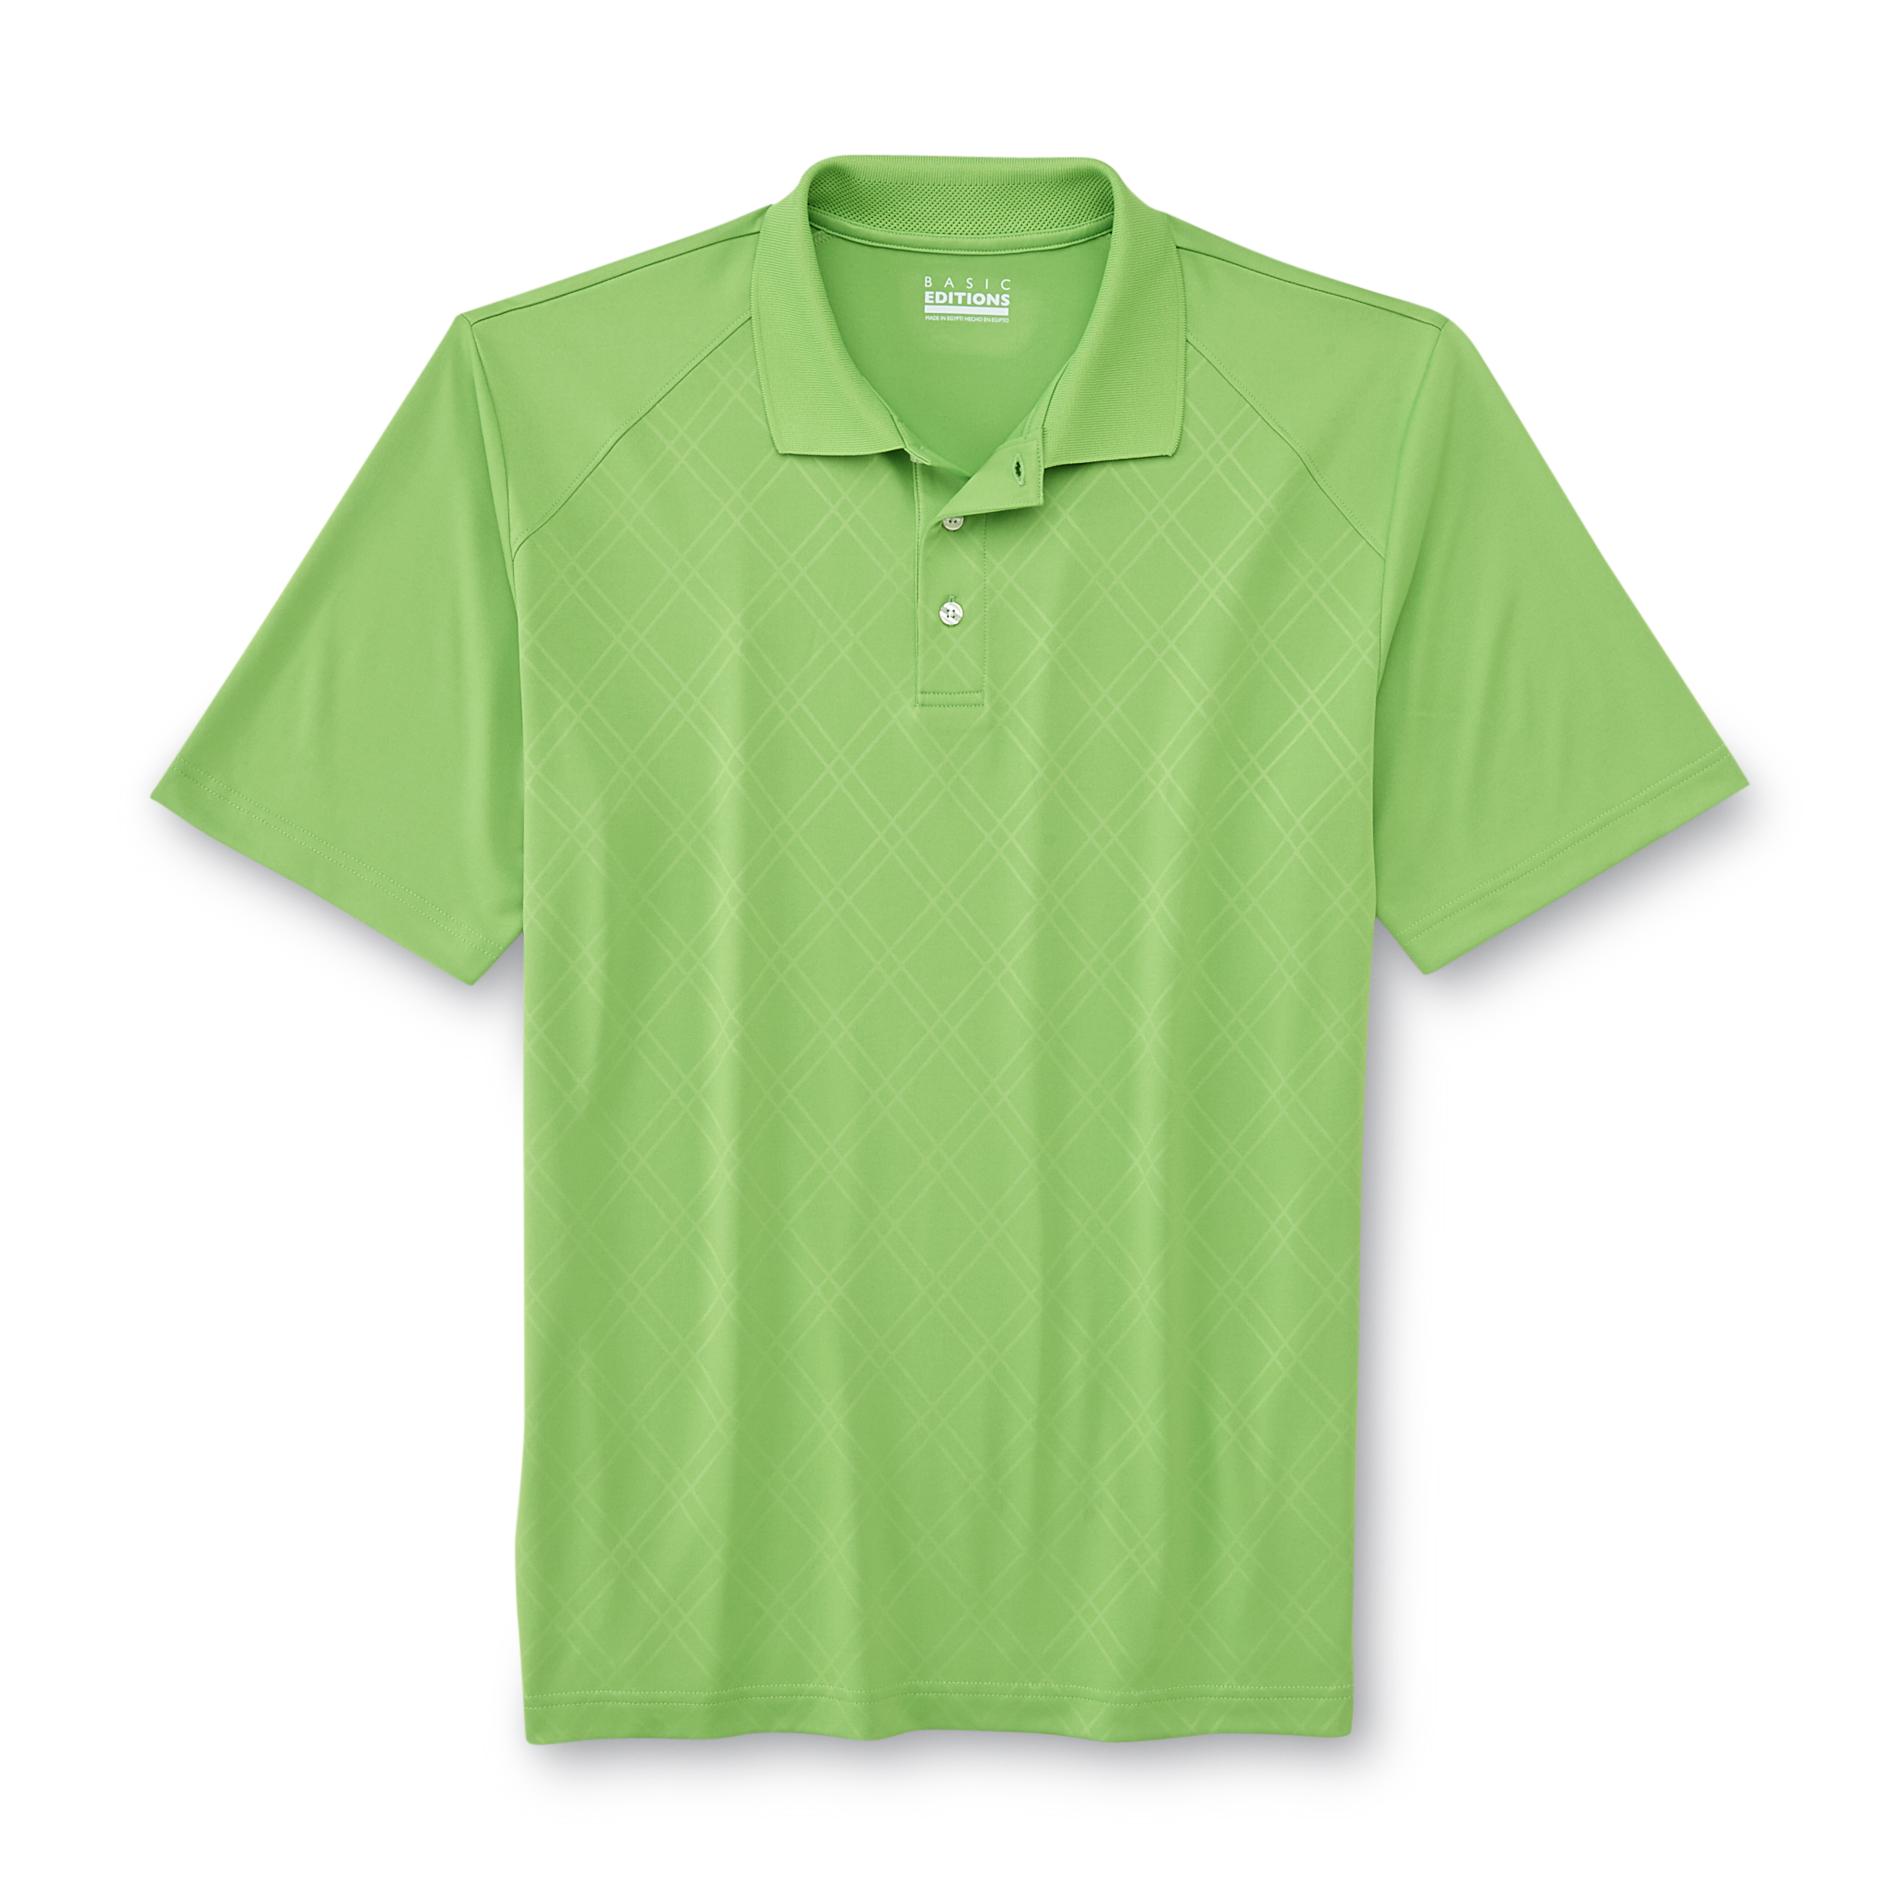 Basic Editions Men's Polo Shirt - Argyle